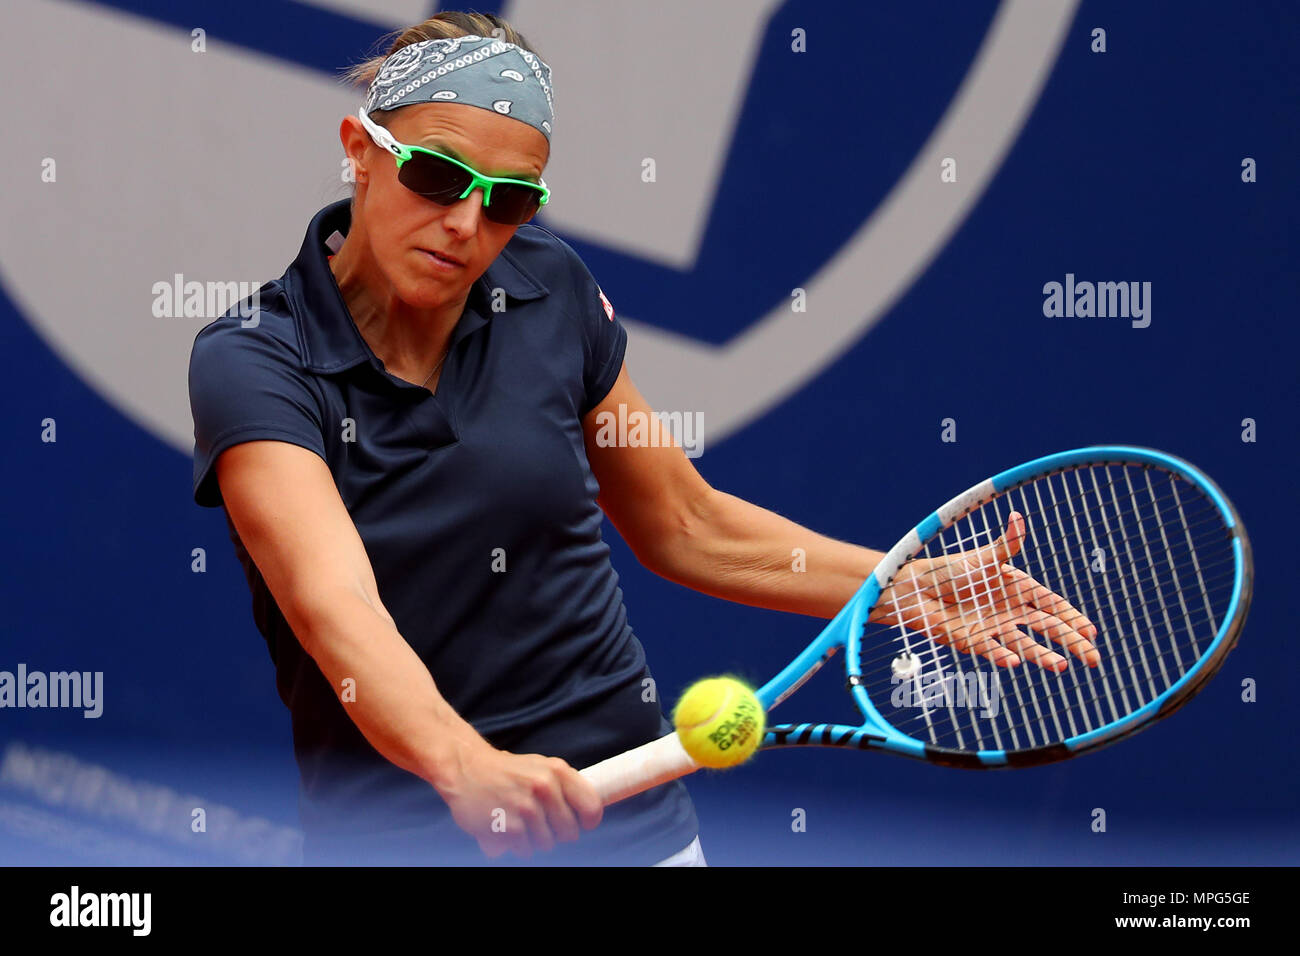 23 May 2018, Germany, Nuremberg: Tennis, WTA-Tour, women's singles. Belgium's Kirsten Flipkens in action. Photo: Daniel Karmann/dpa Stock Photo